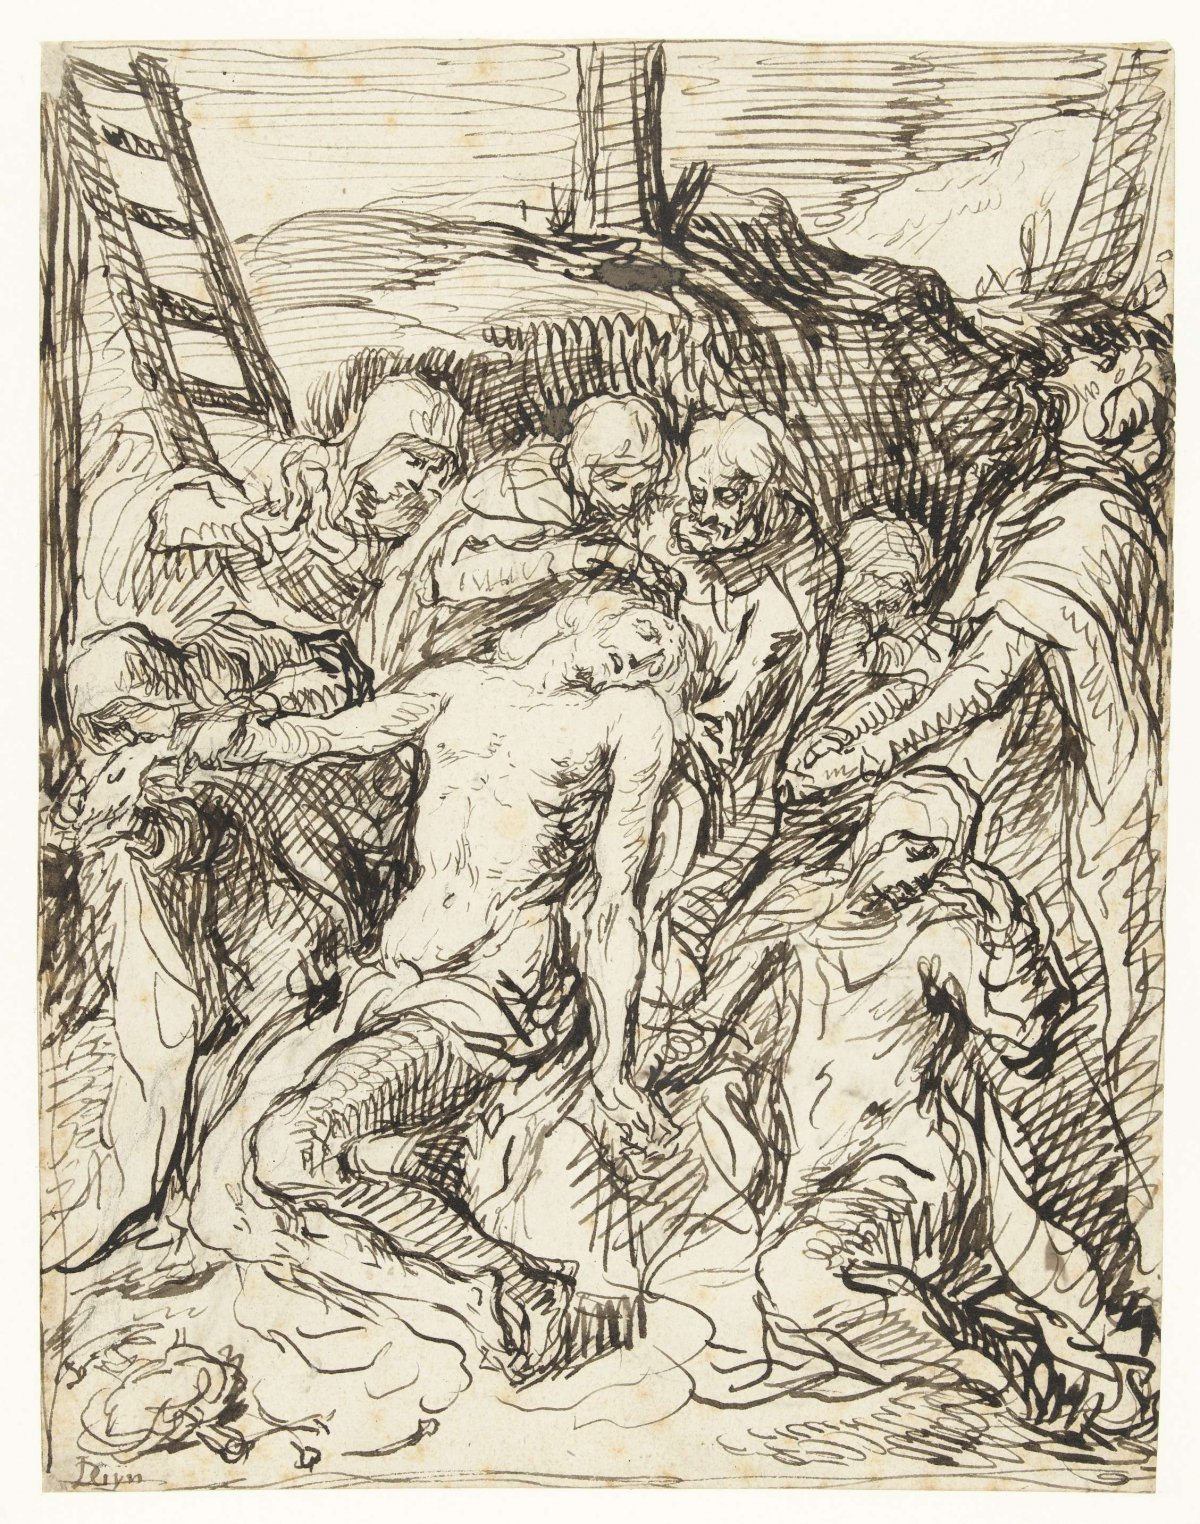 Lamentation of Christ, Jacques de Gheyn (II), 1620 - 1625